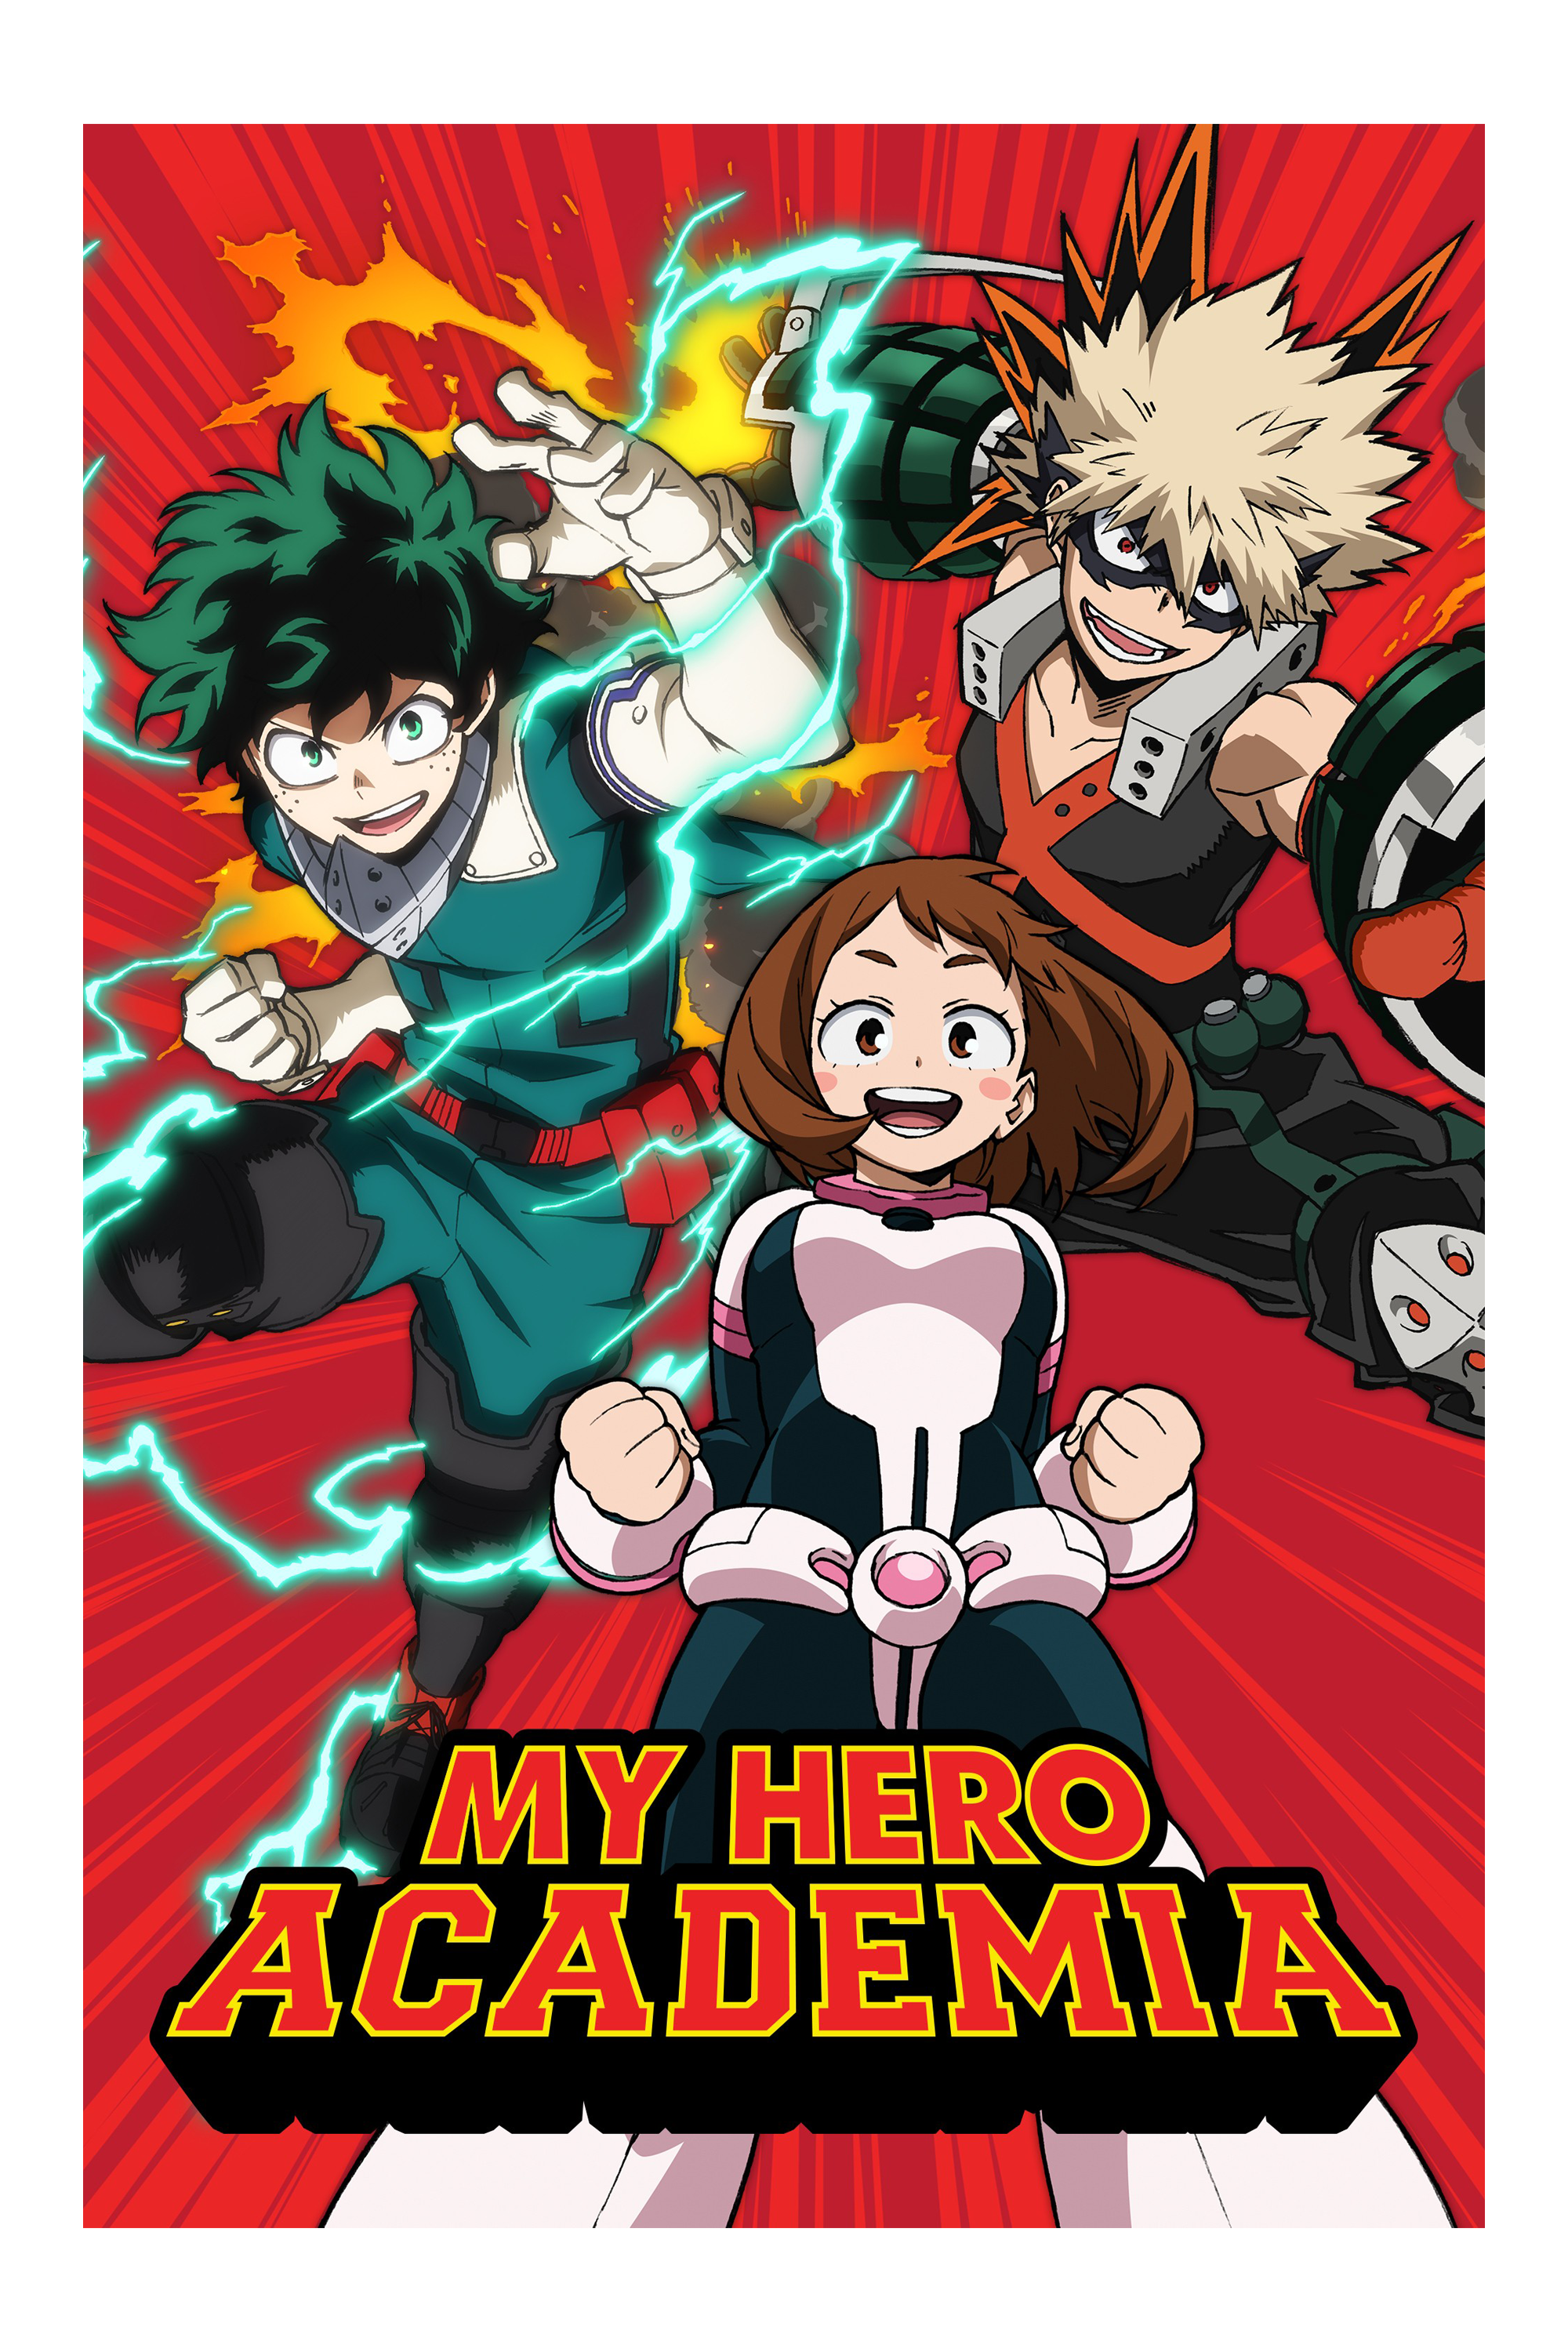 Download Hero Academia My Characters Download Free Image HQ PNG Image |  FreePNGImg